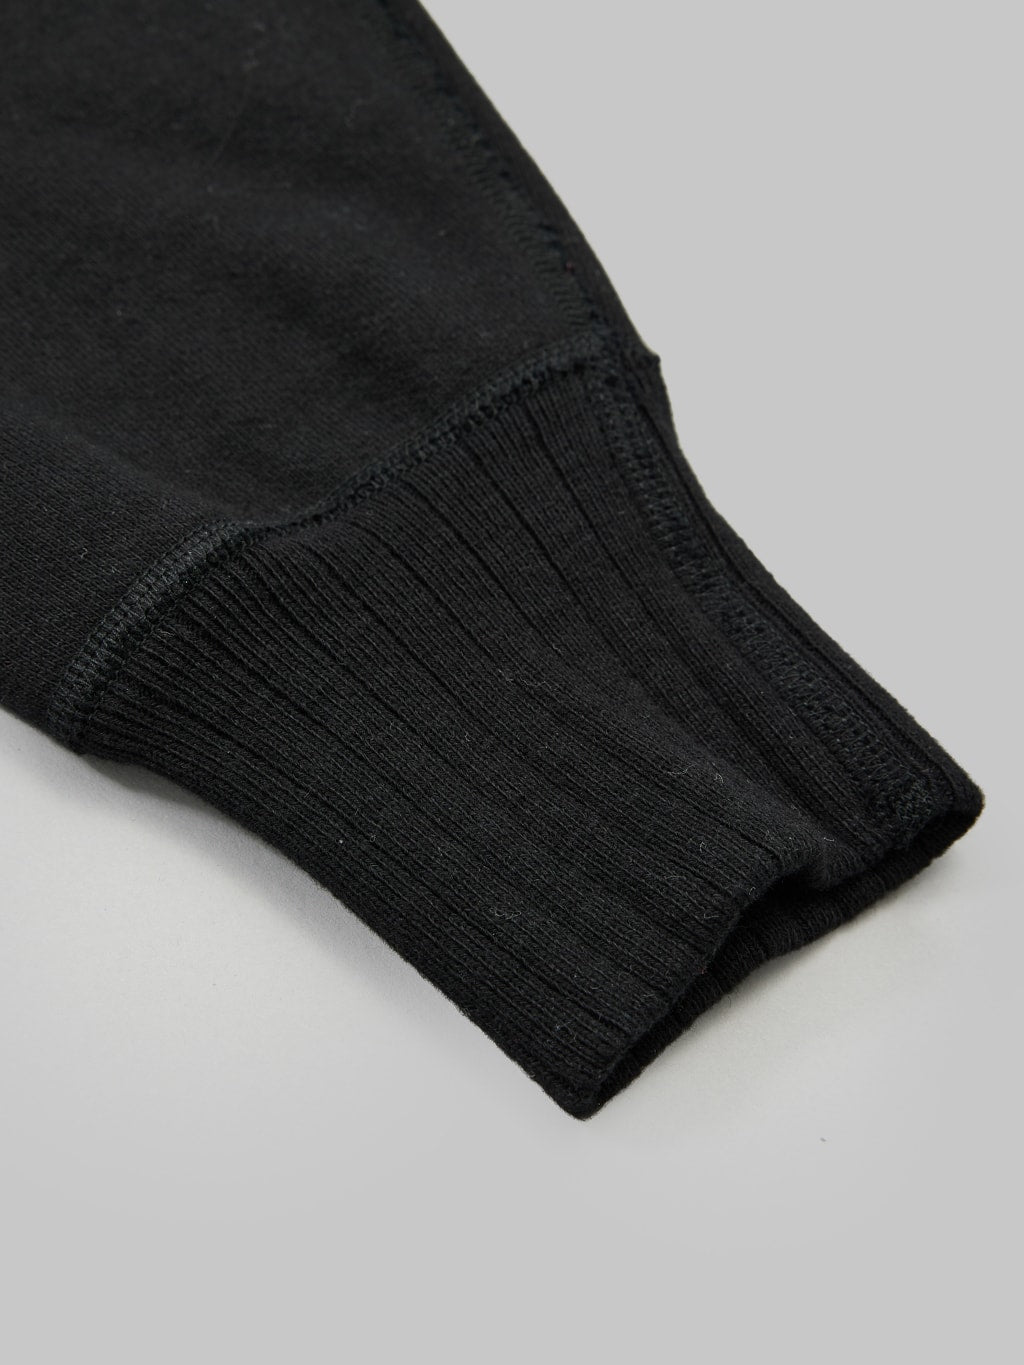 Whitesville cotton Loopwheel Sweatshirt Black  cuff closeup